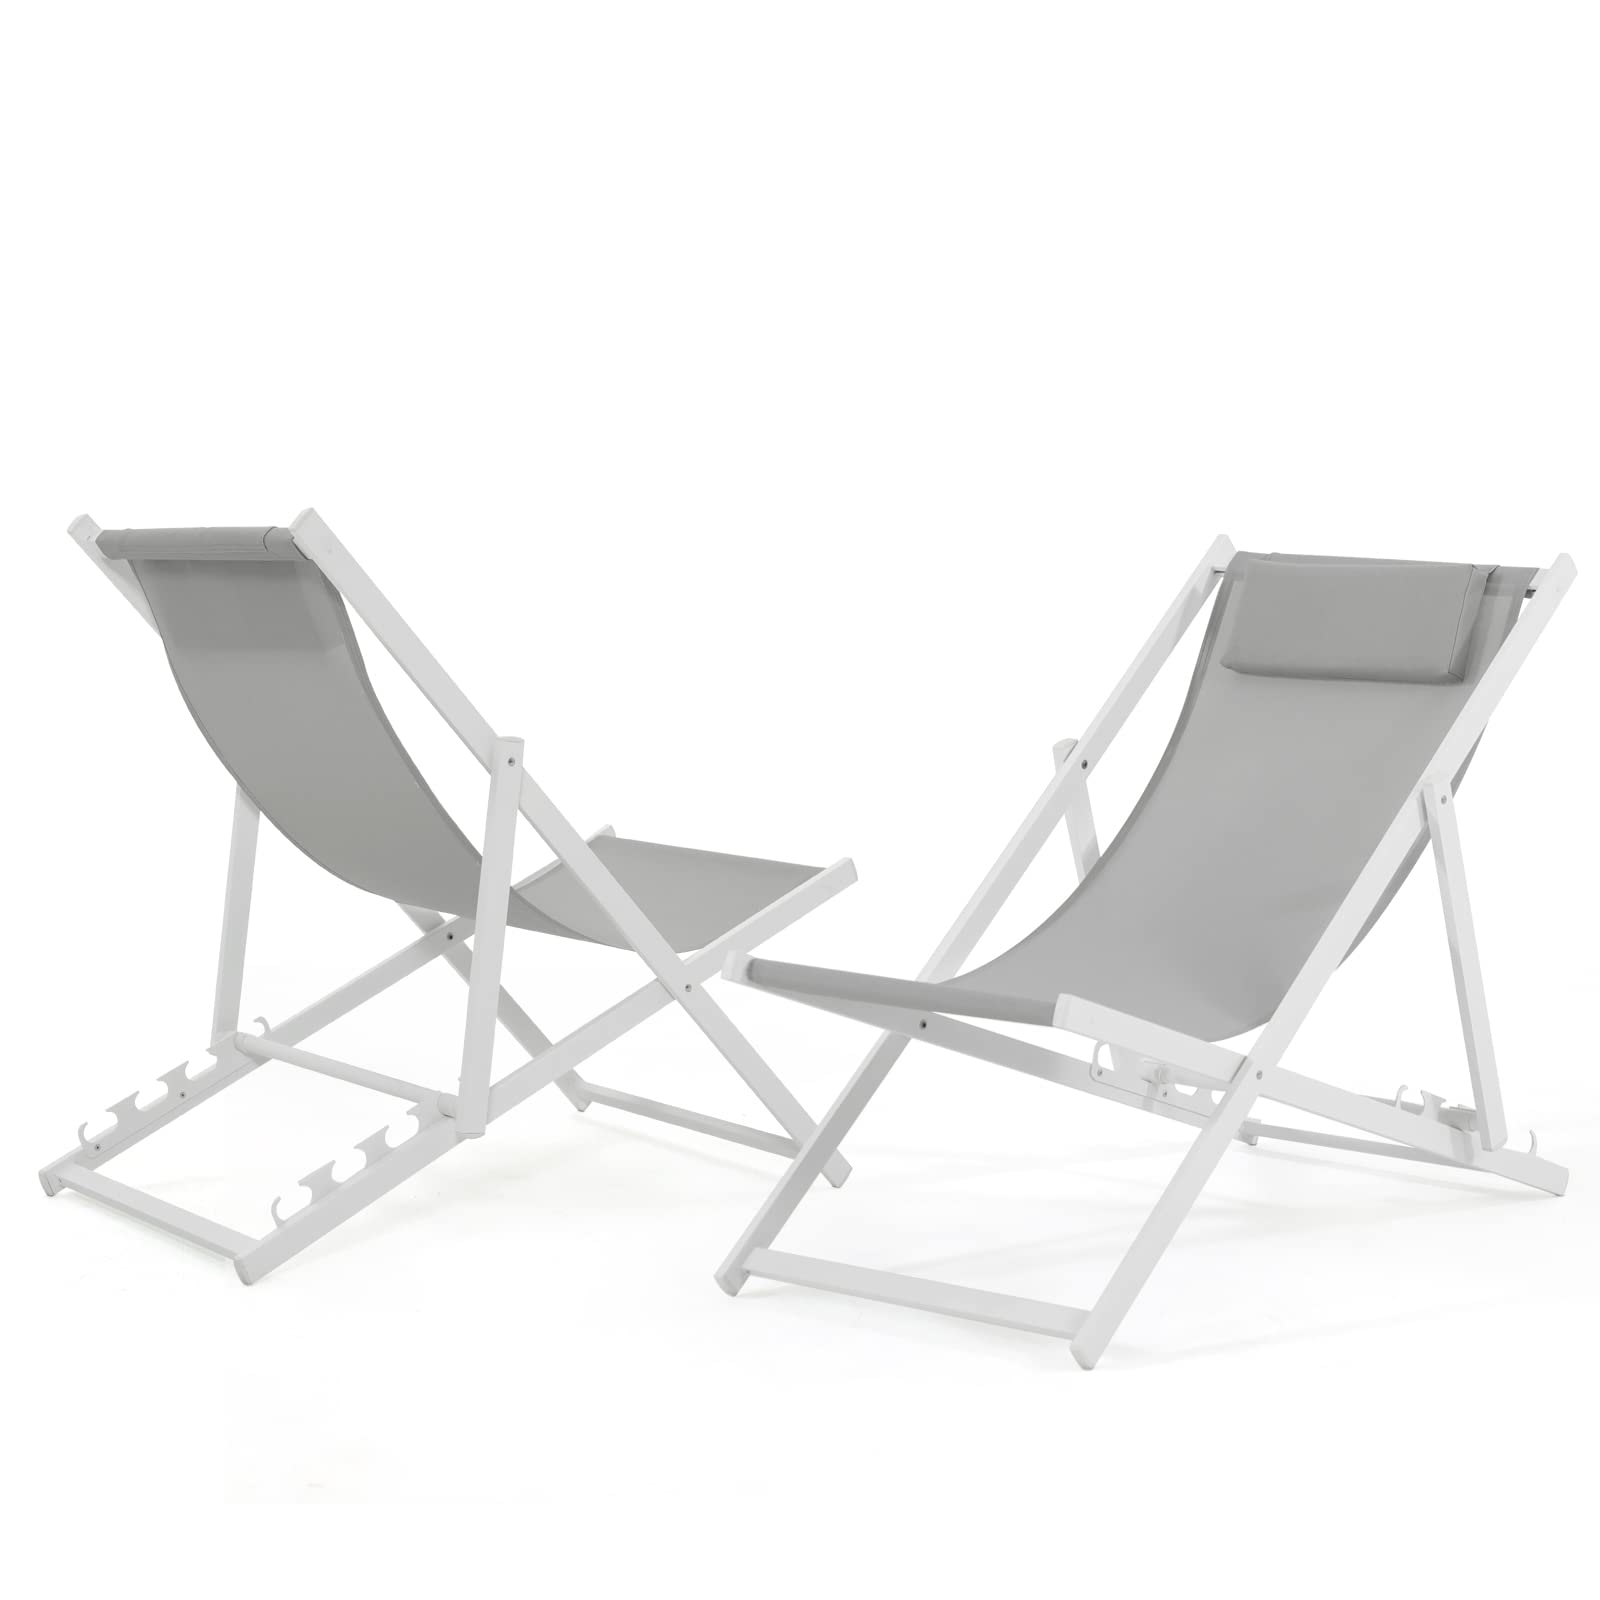 Outdoor Folding Sling Chair Set of 2, Aluminum Portable Lounge Chair Reclining Beach Chair